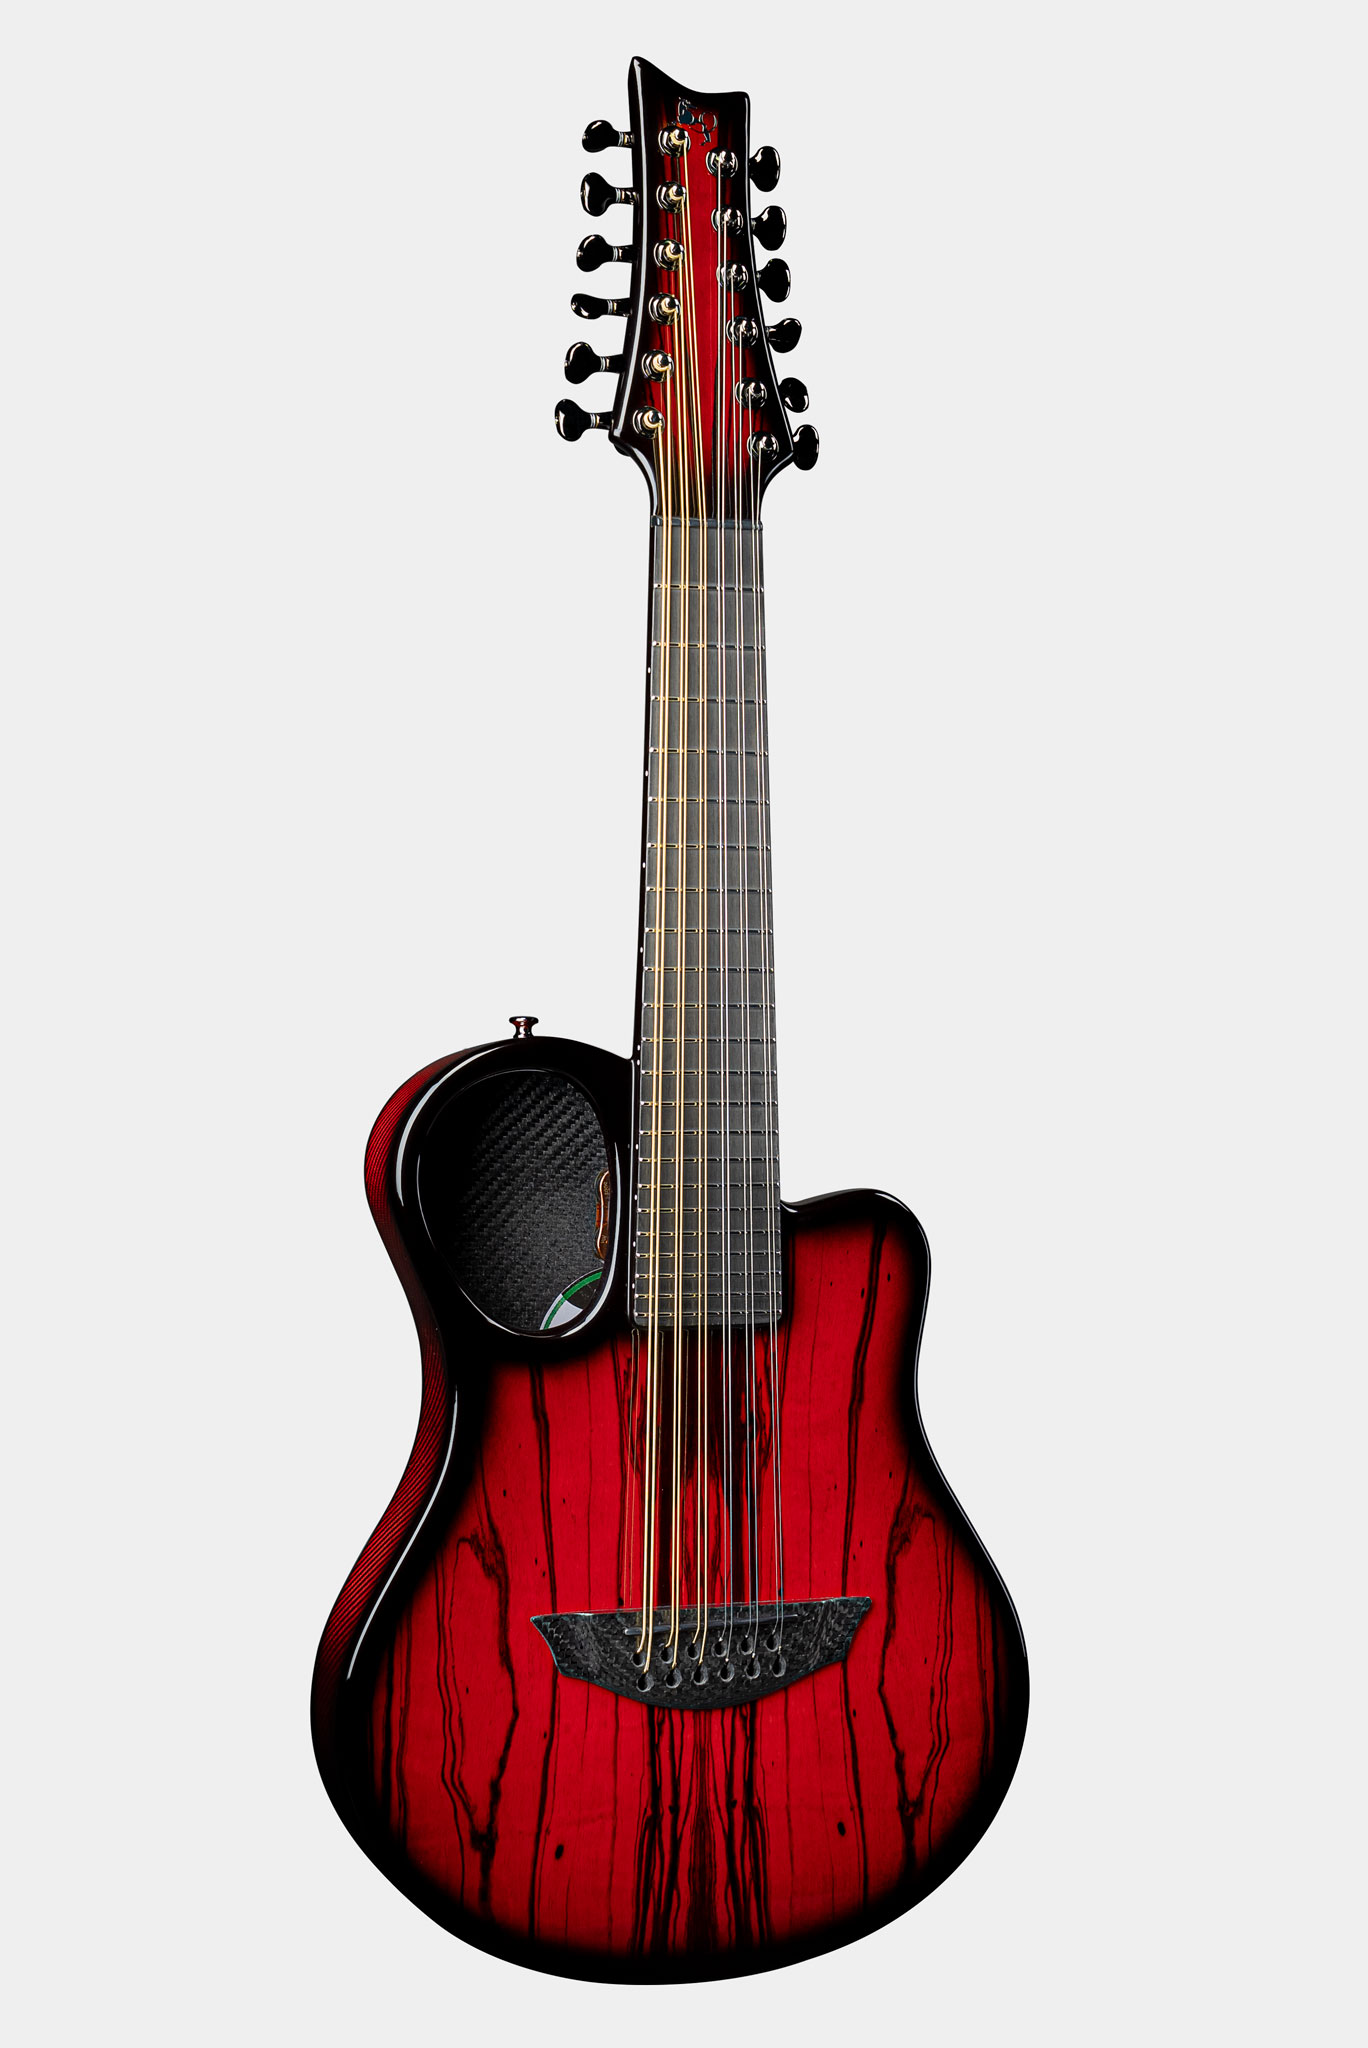 Emerald Amicus Carbon Fiber Guitar in Vibrant Red Ebony